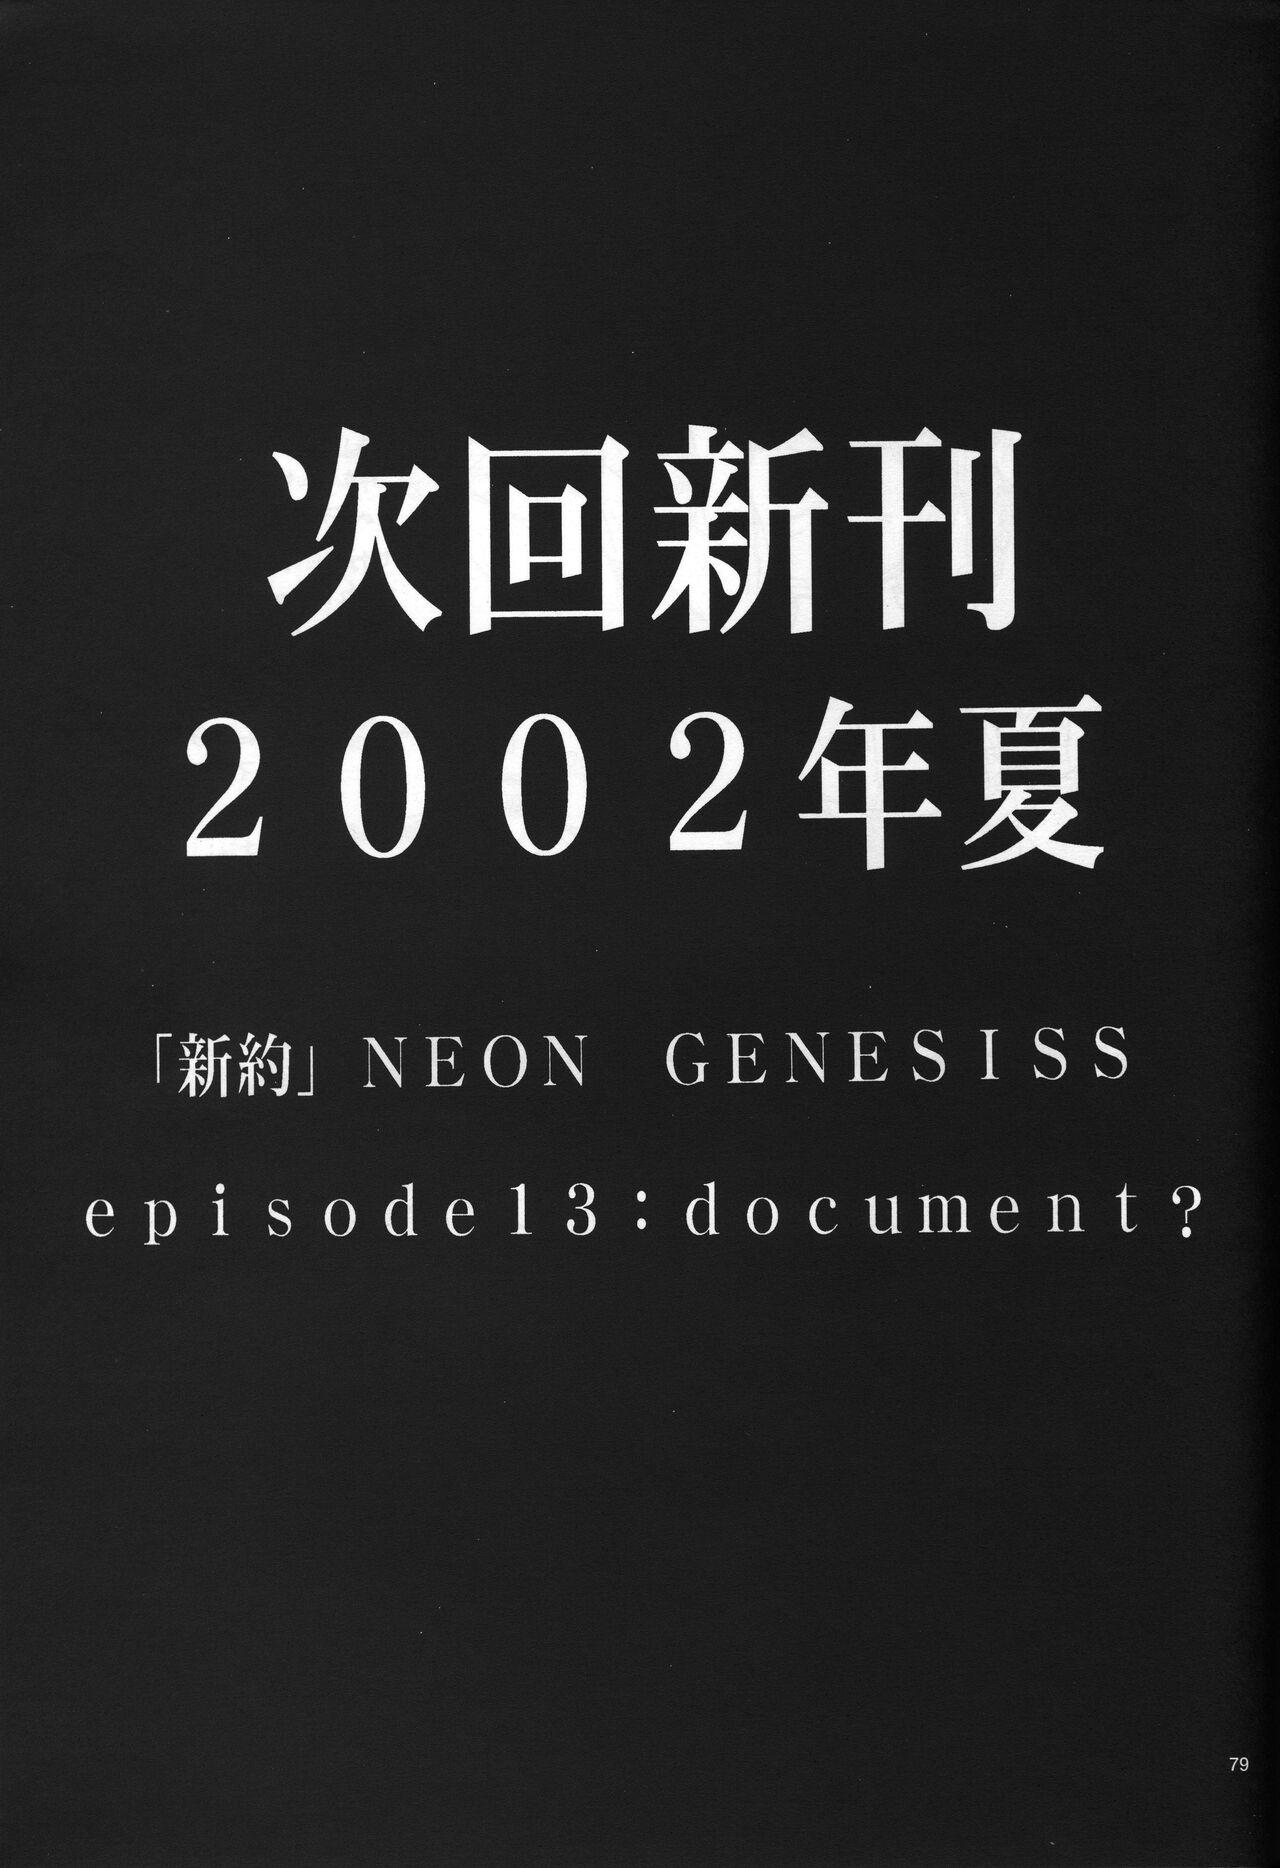 <New Testament> neon genesis documentＡ Episode 0:13-1 80